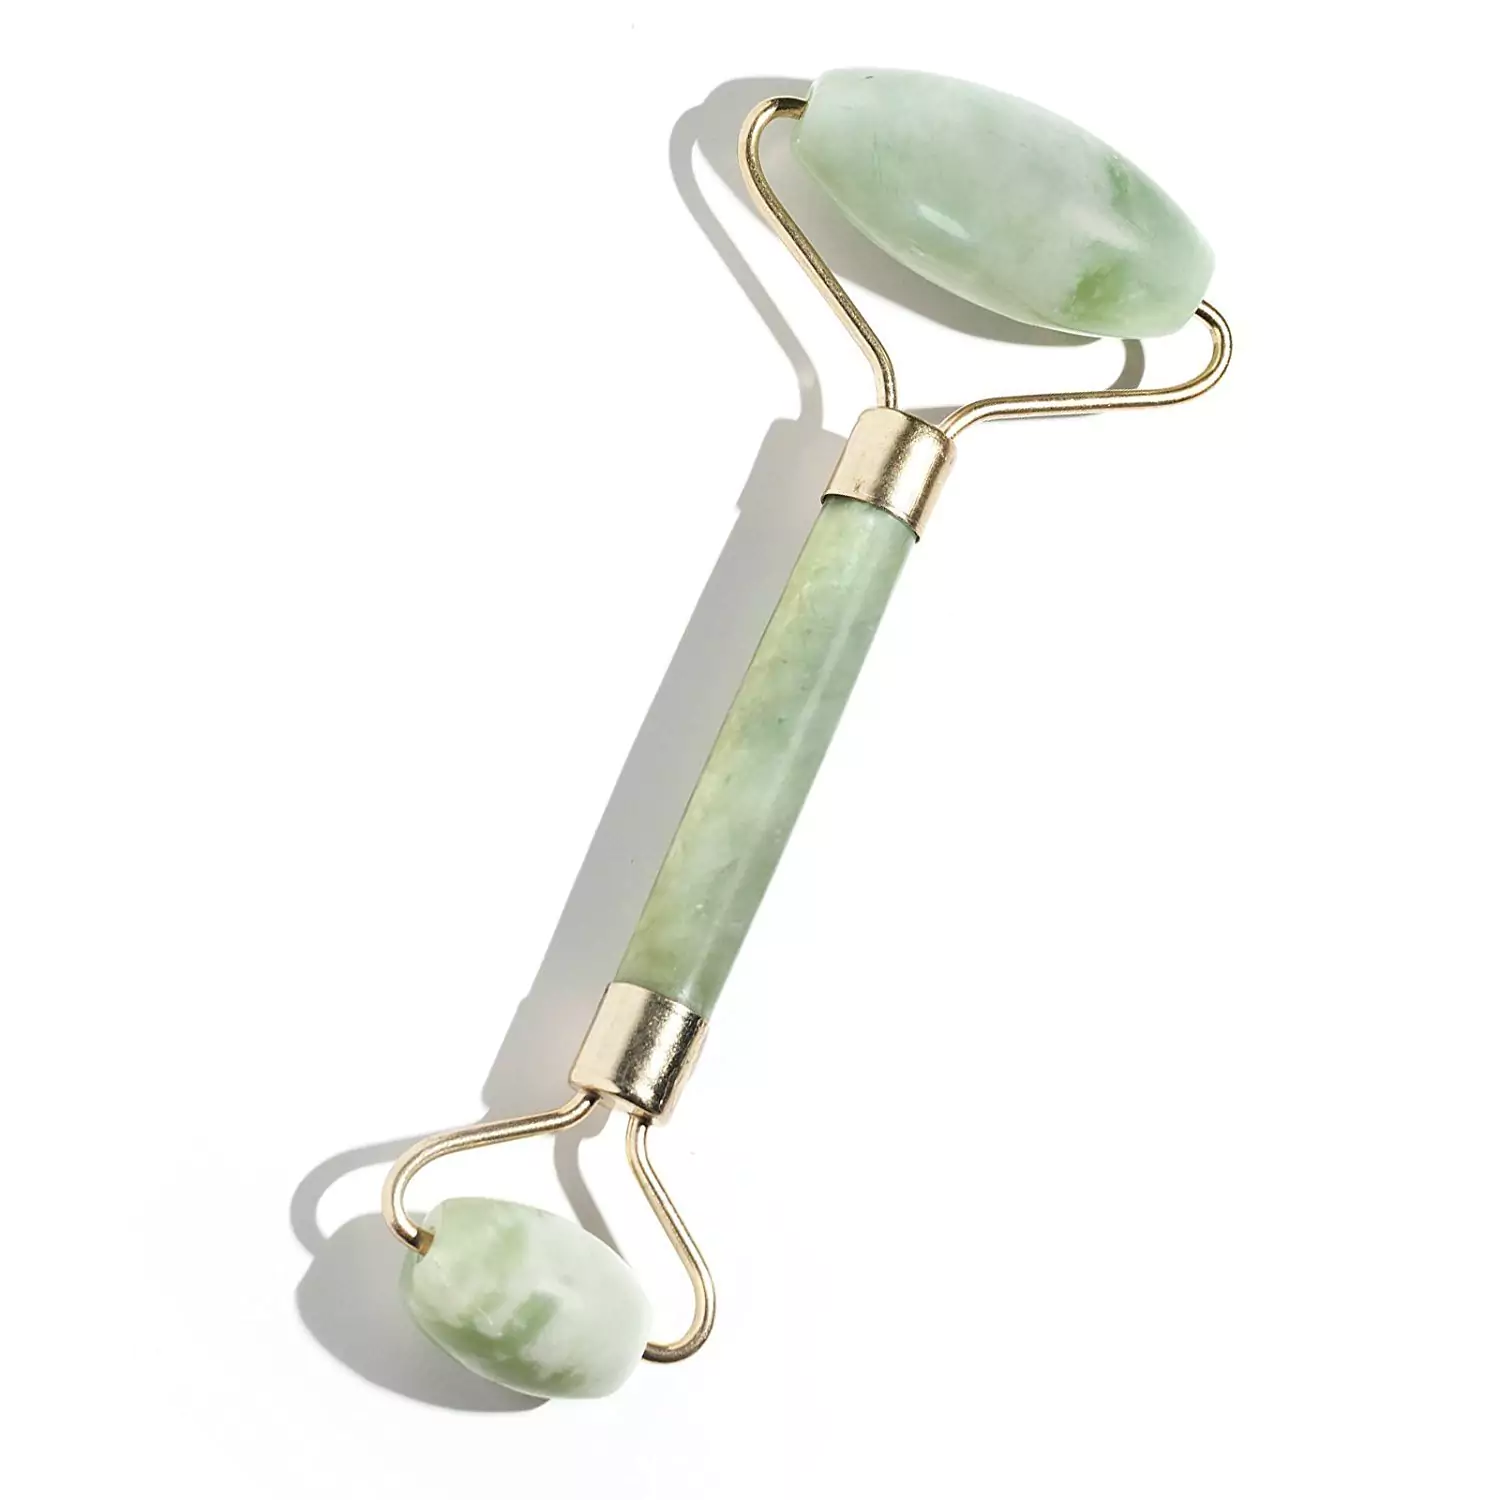 jade-roller-with-jade-stone-gold-metal-handle